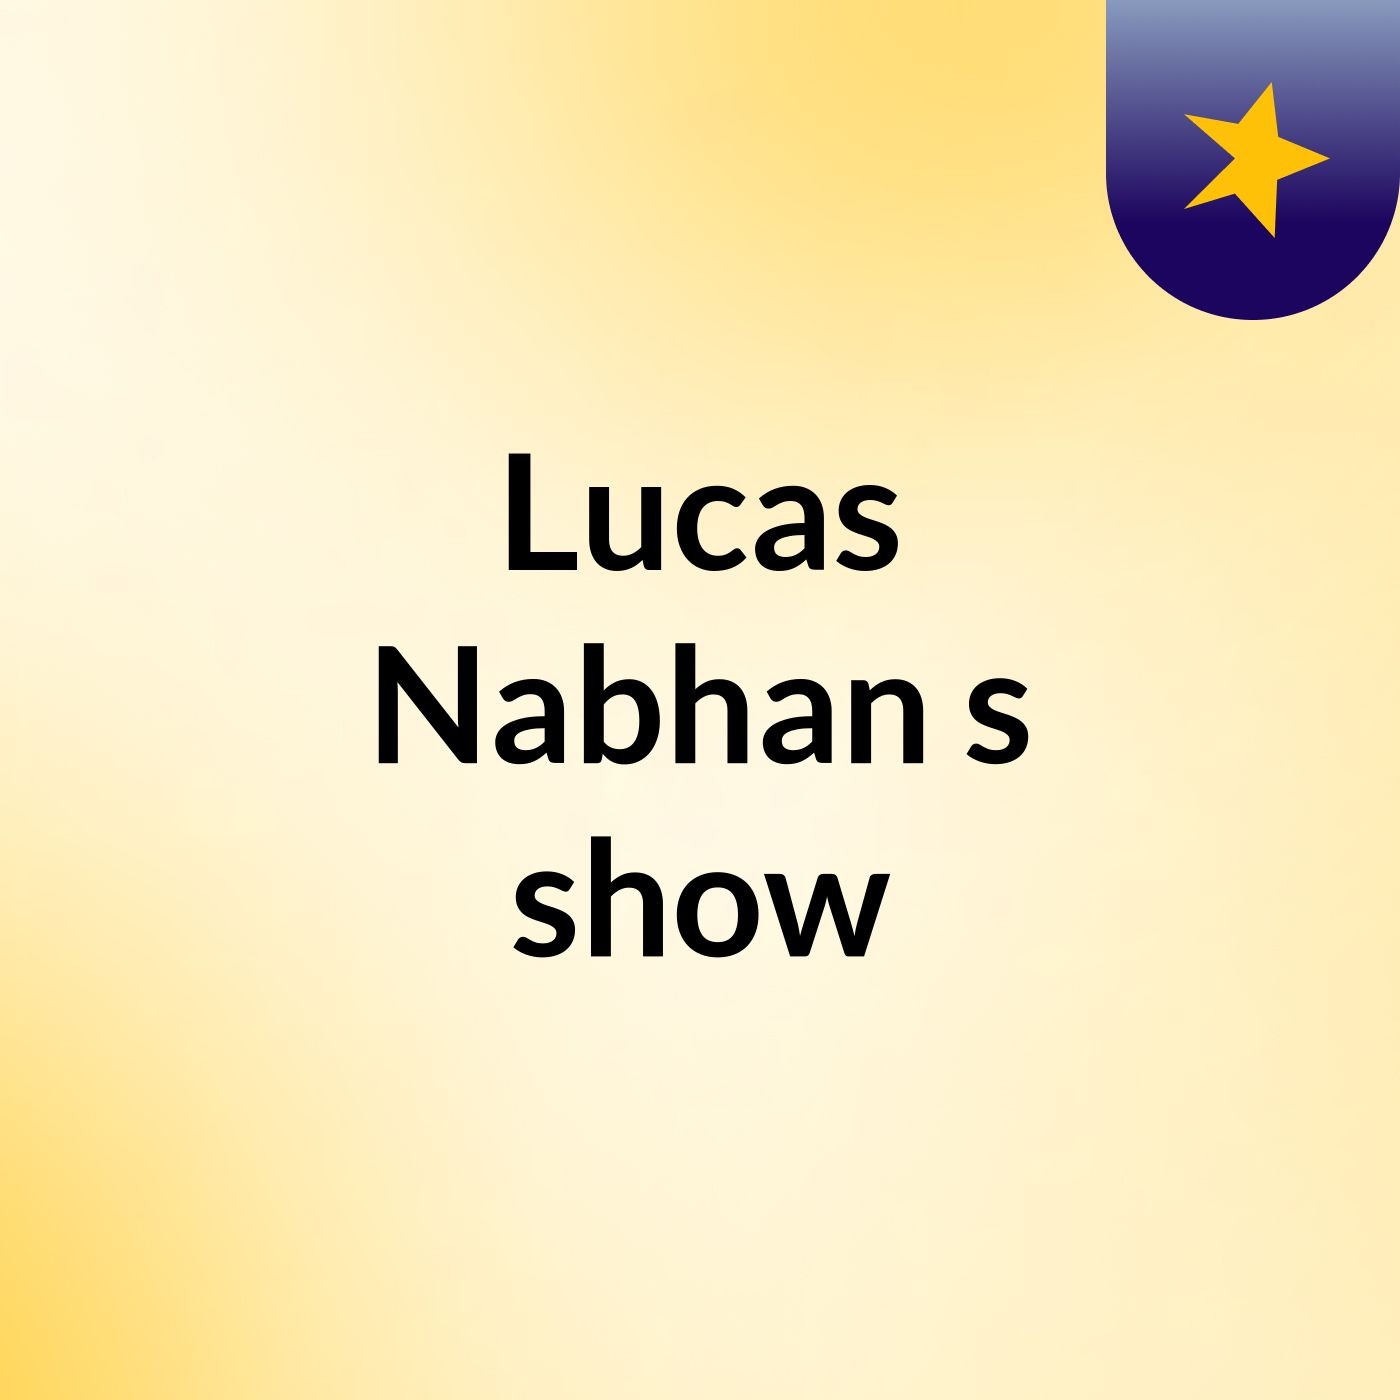 Lucas Nabhan's show